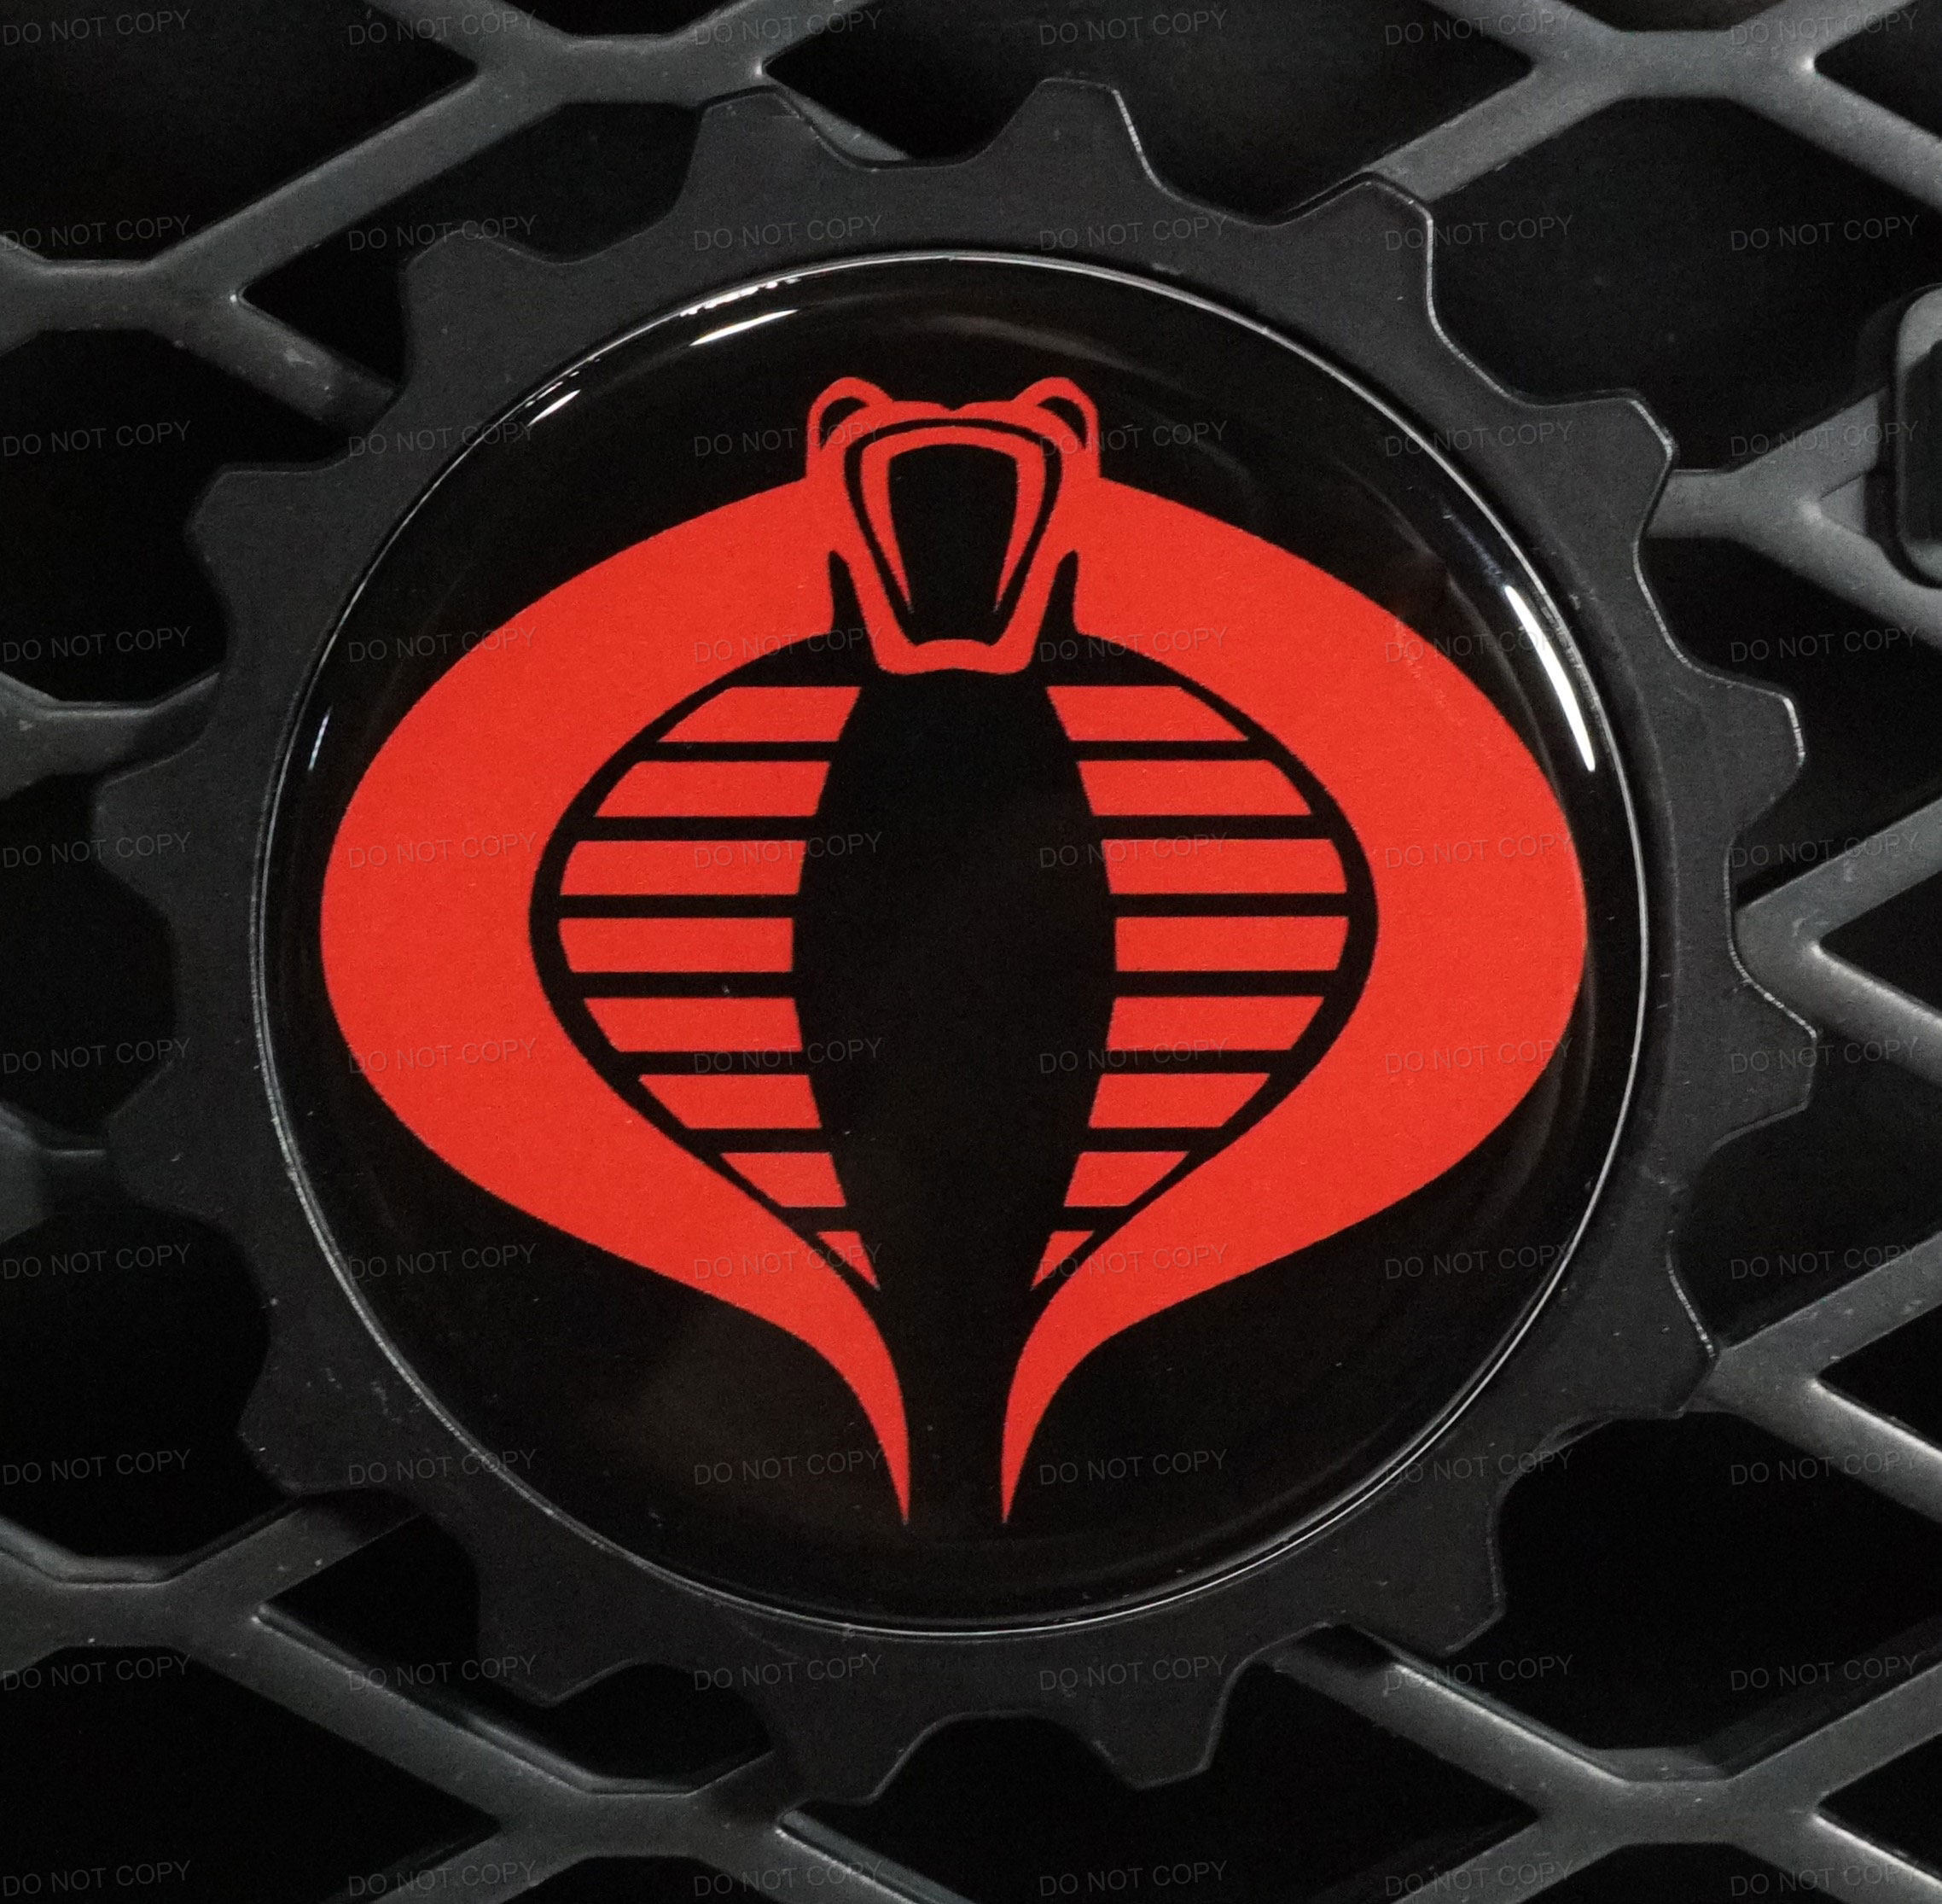 Cobra Badge